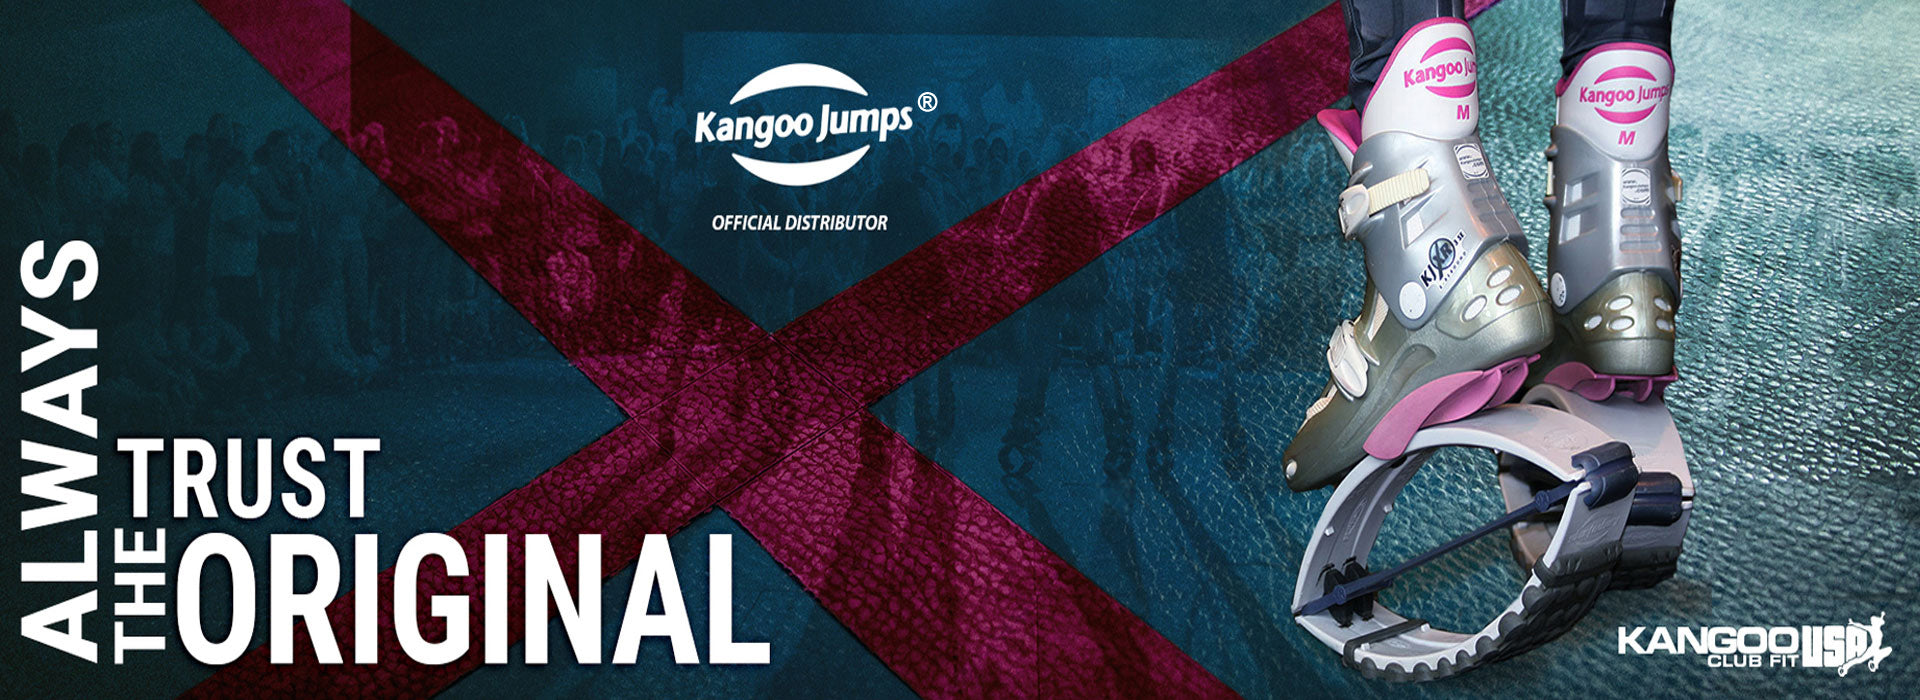 Kangoo Club Fit USA  Americas top Kangoo Jumps rebound boot seller!